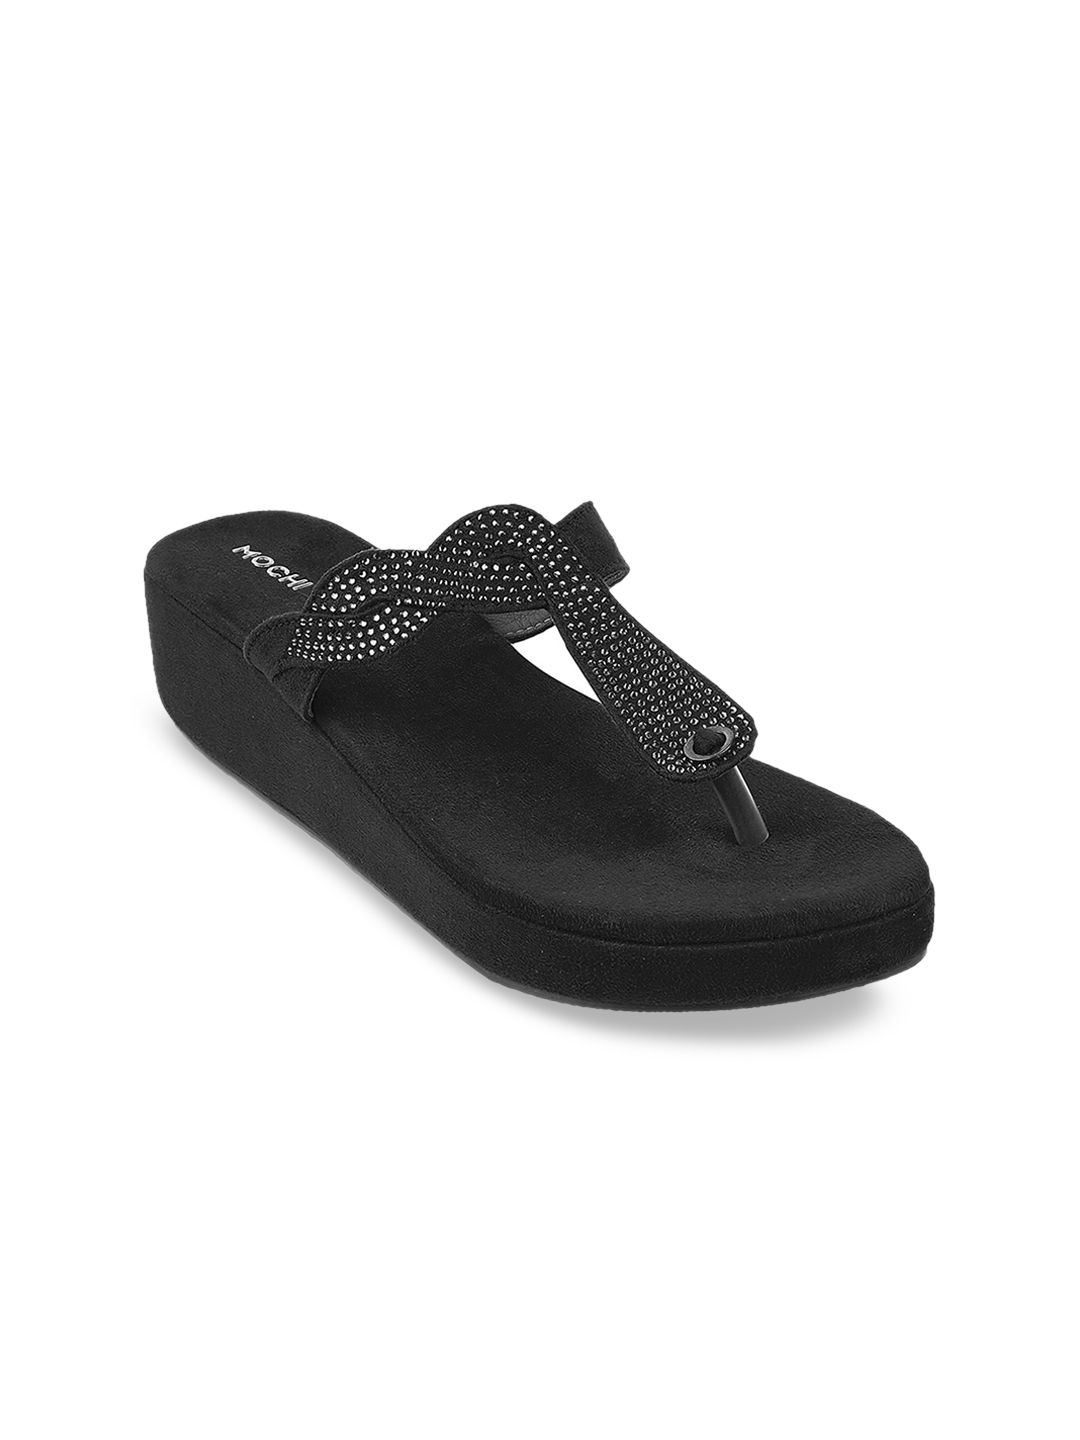 Mochi Black Embellished Wedge Sandals Price in India